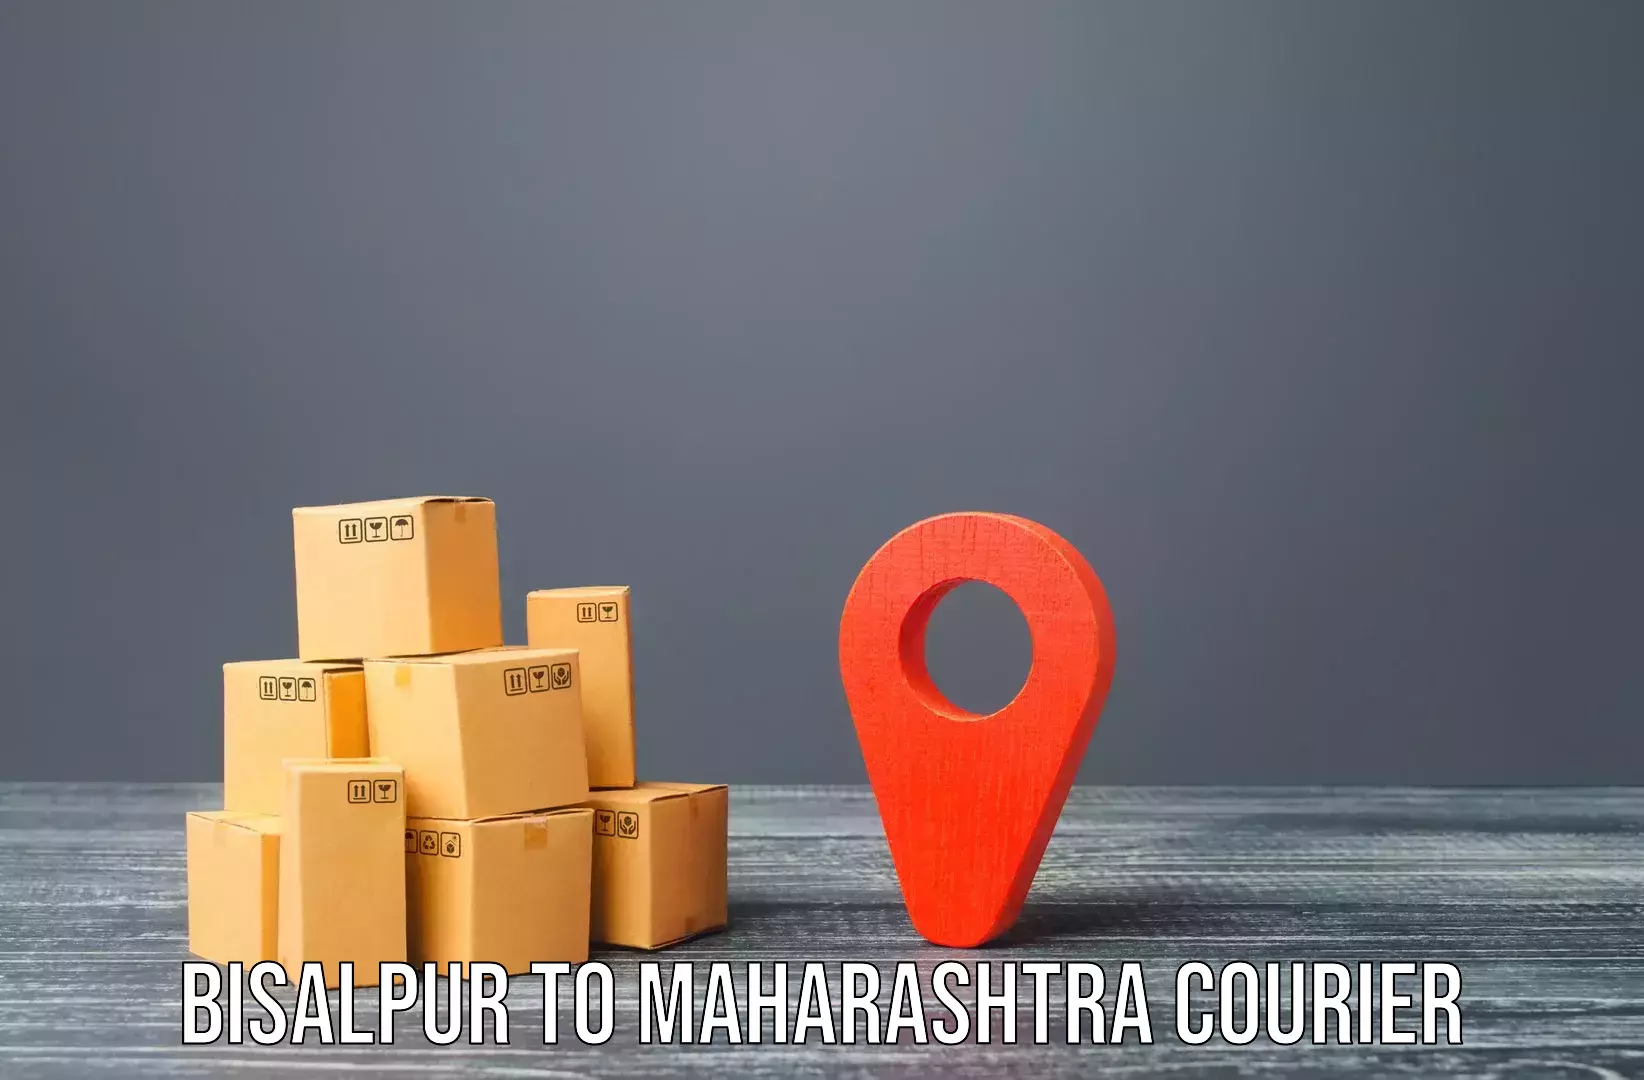 Furniture delivery service Bisalpur to Savitribai Phule Pune University